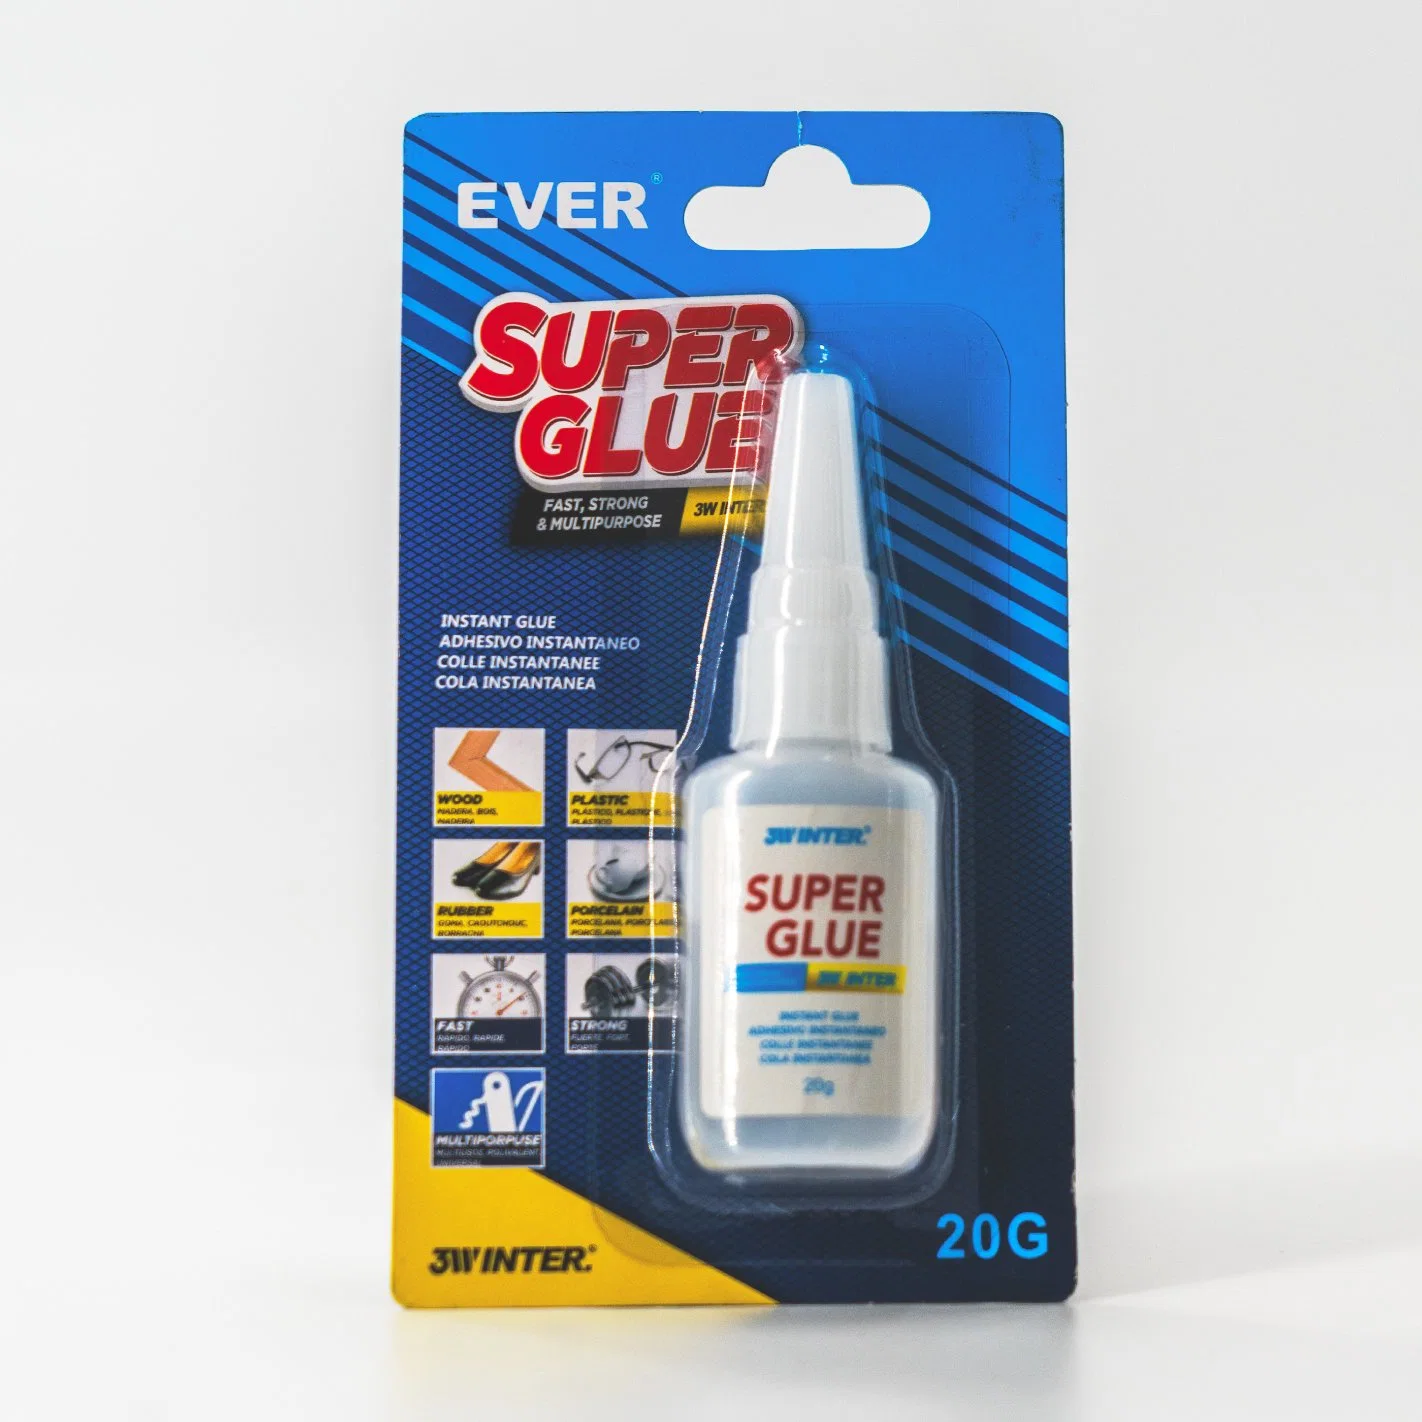 Original Ethyl Cyanoacrylate Adhesivo Best Super Glue 20 Gr for Plastic